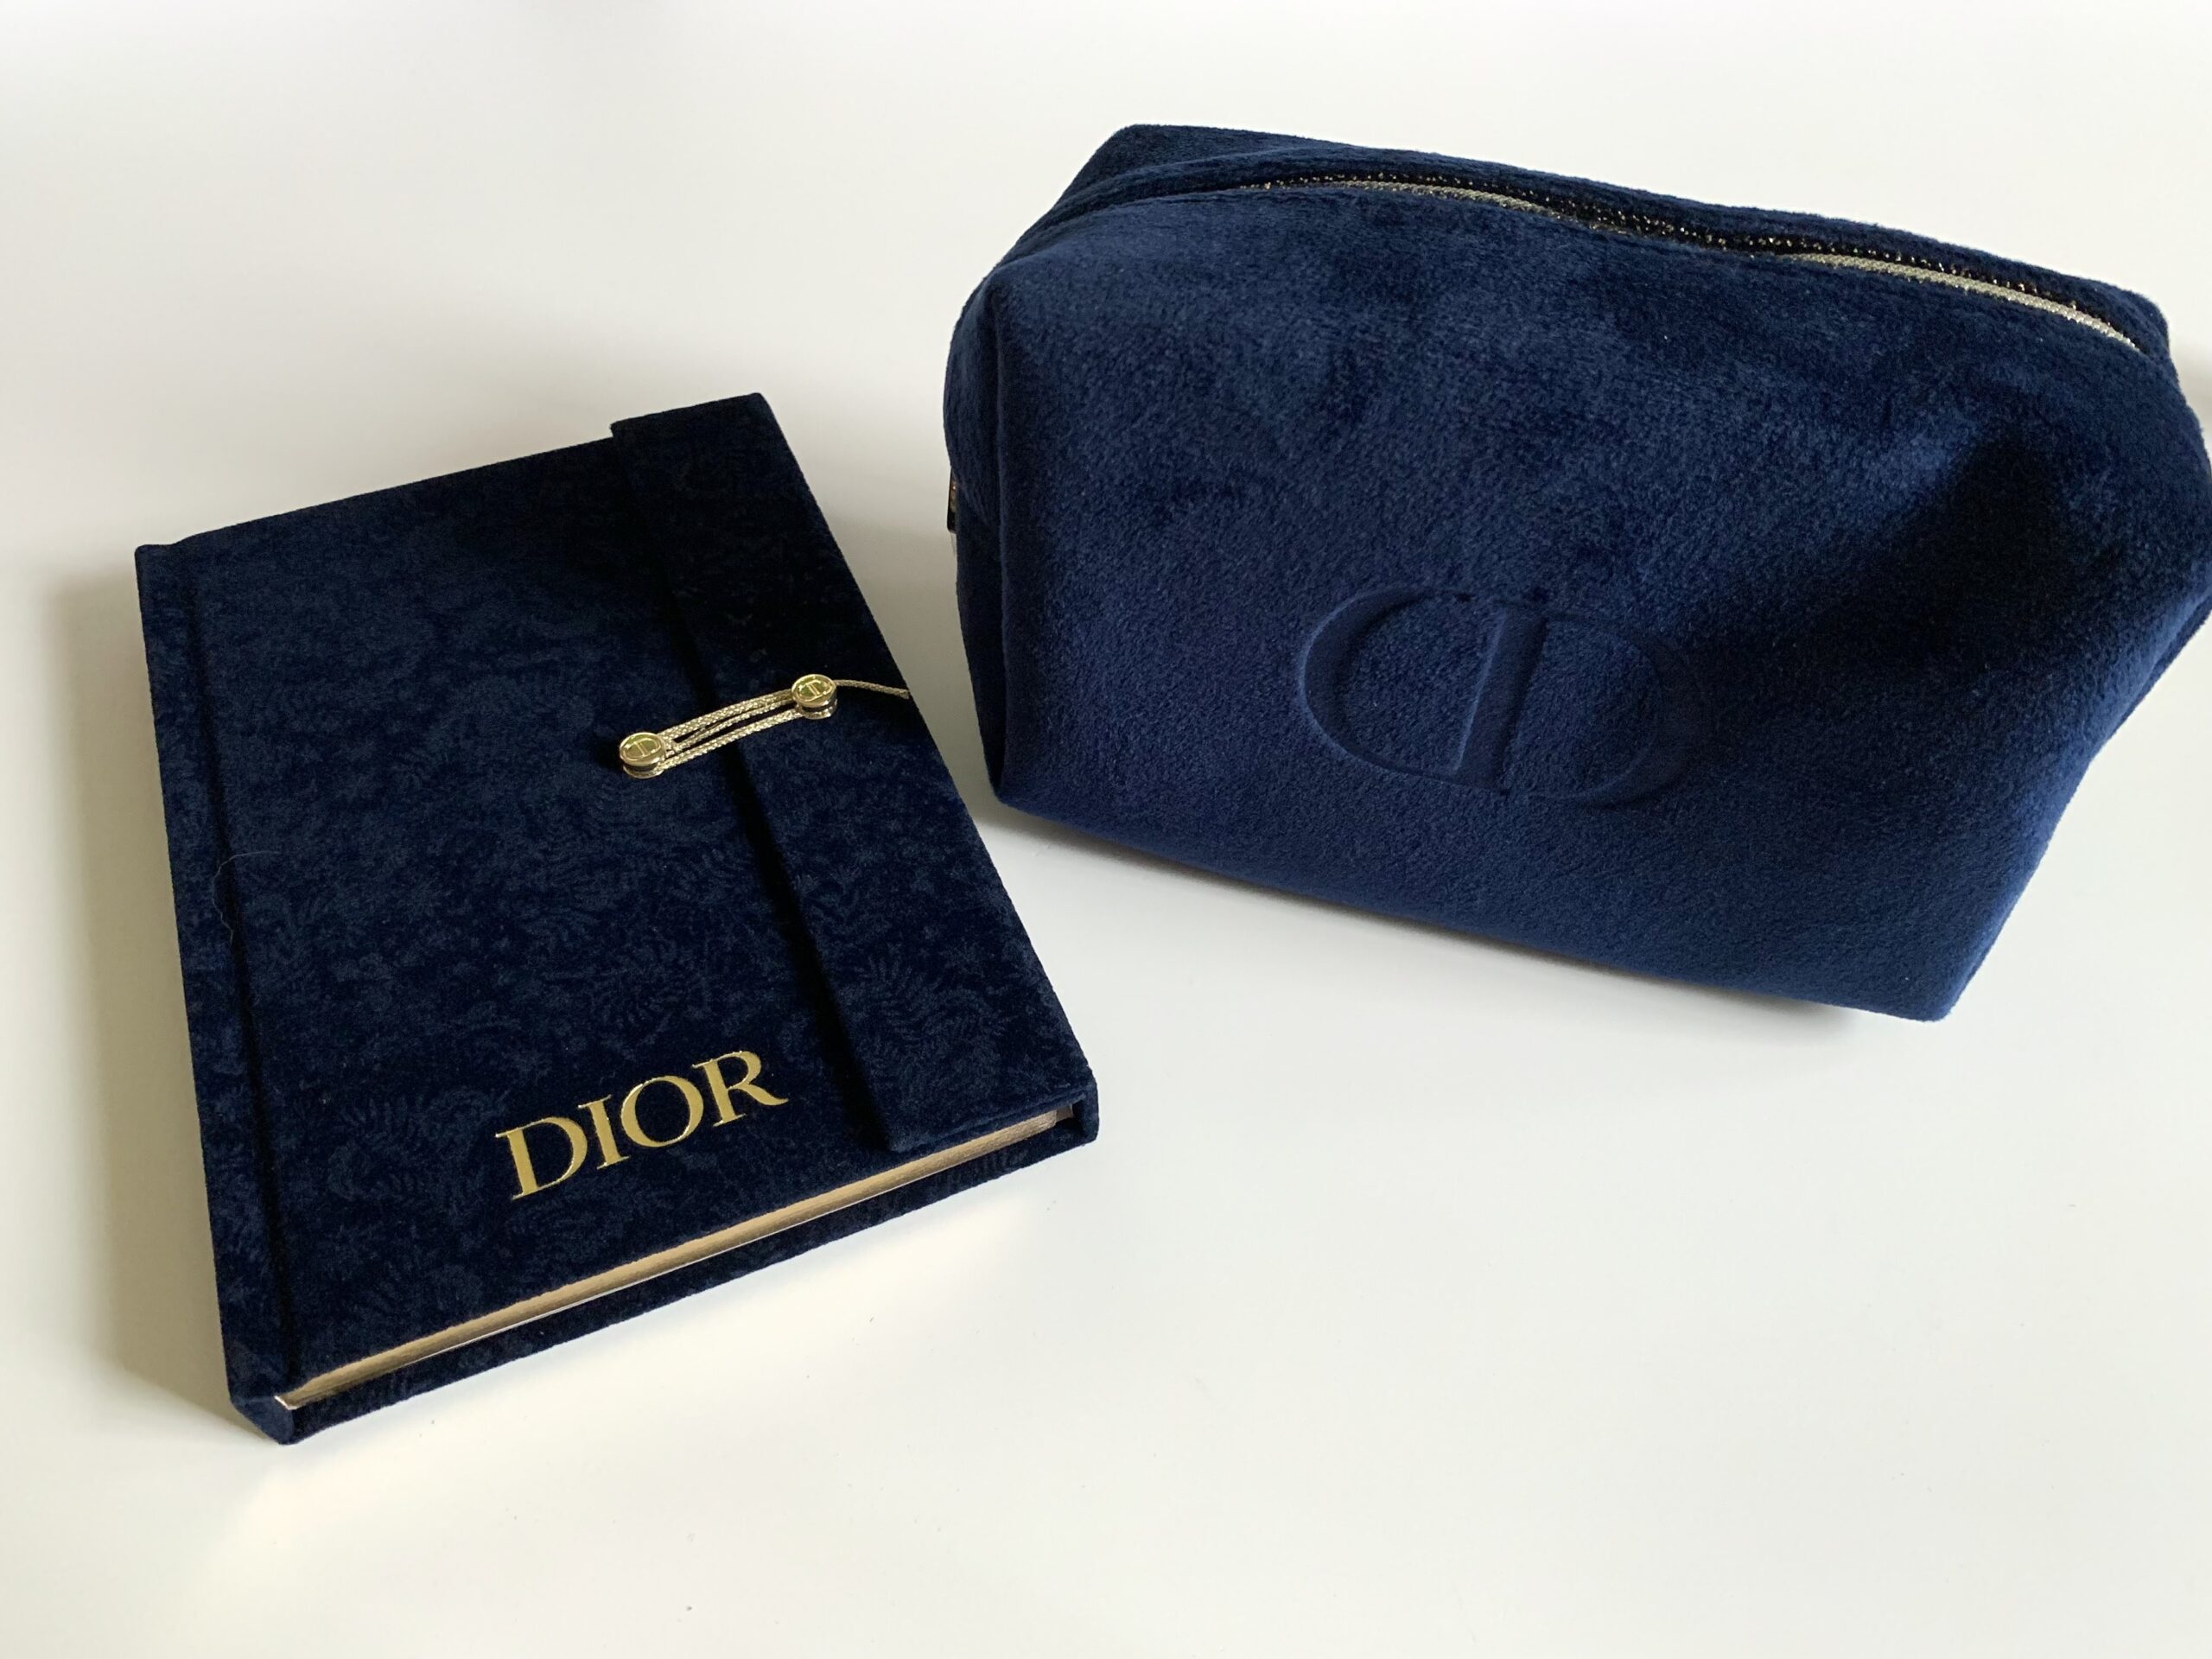 Dior ディオール ノベルティポーチ | Diorノベルティポーチ | vkm3.de